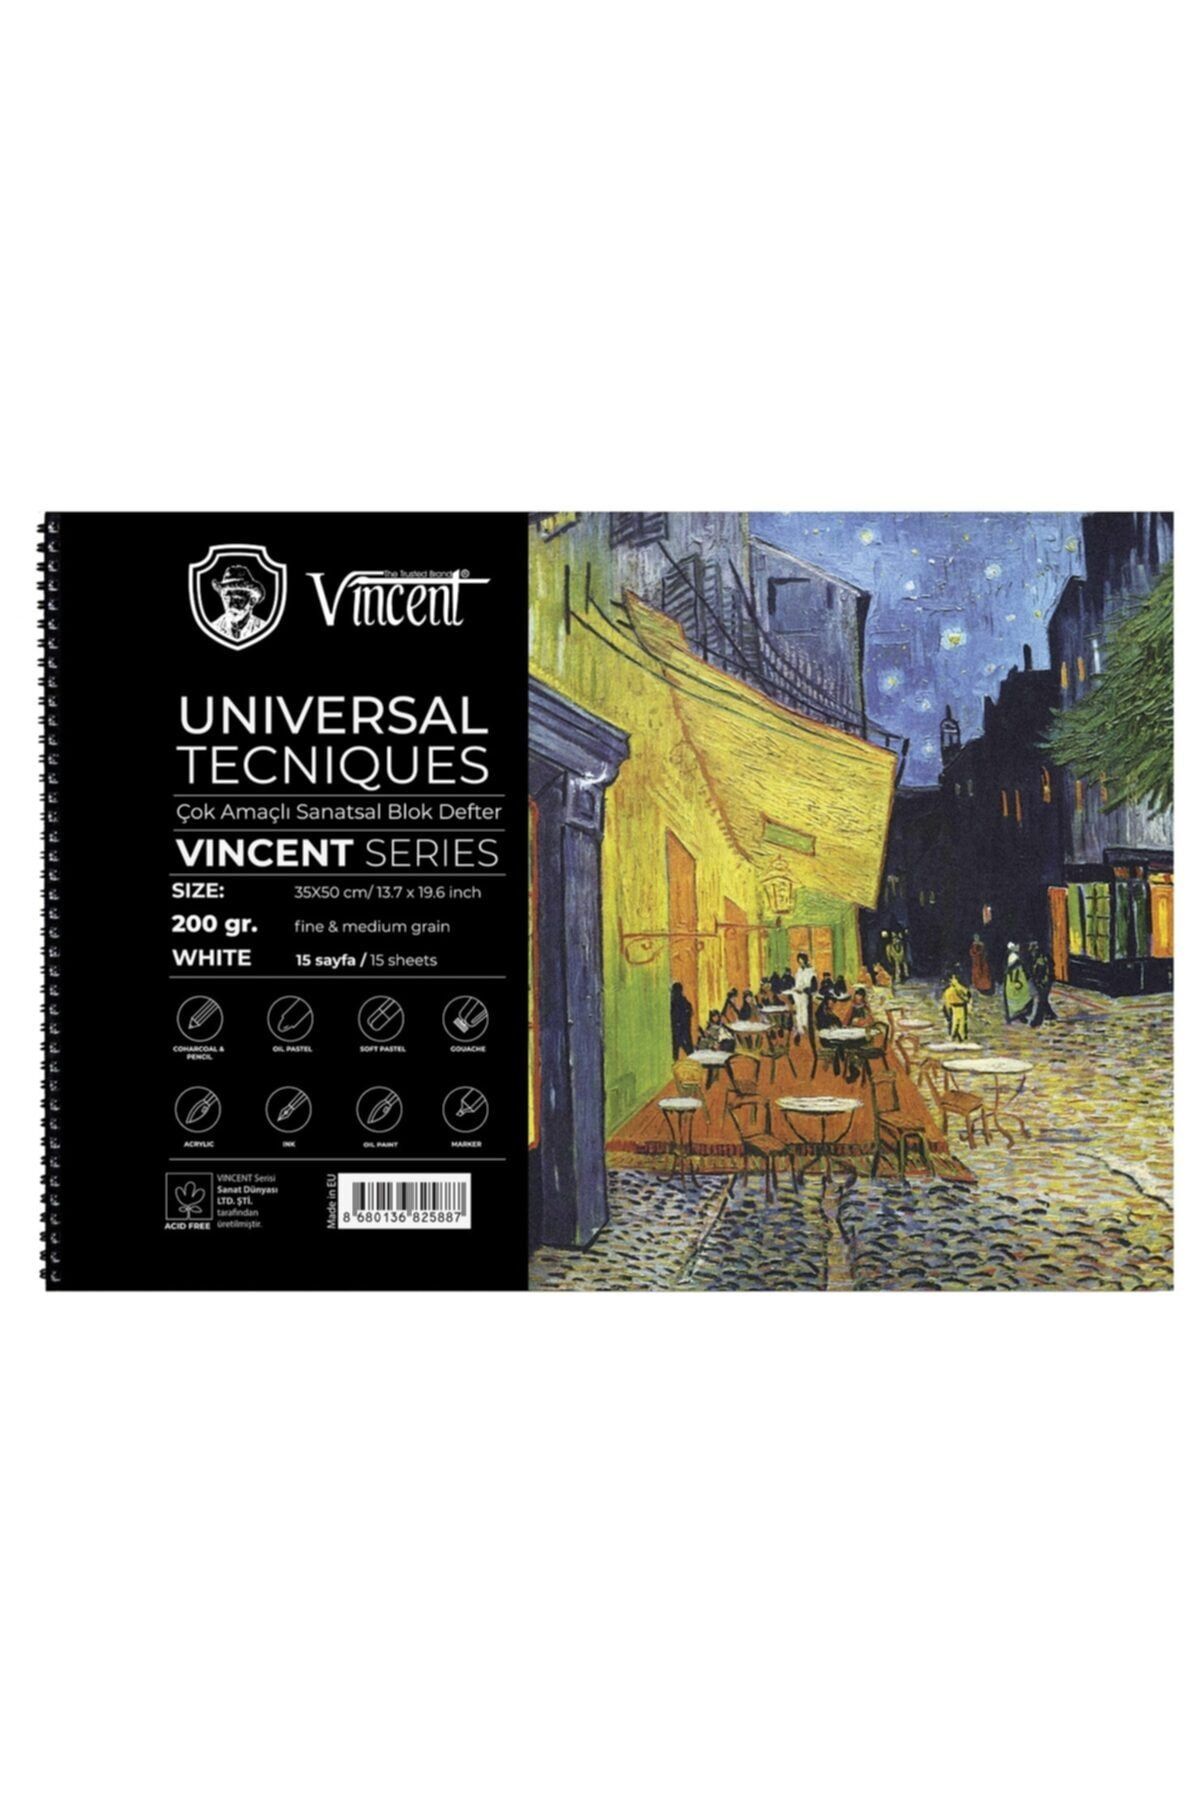 Vincent Vıncent Unıversal Tecnıques Whıte 200gr 35x50 15 Sayfa Çok Amaçlı Defter